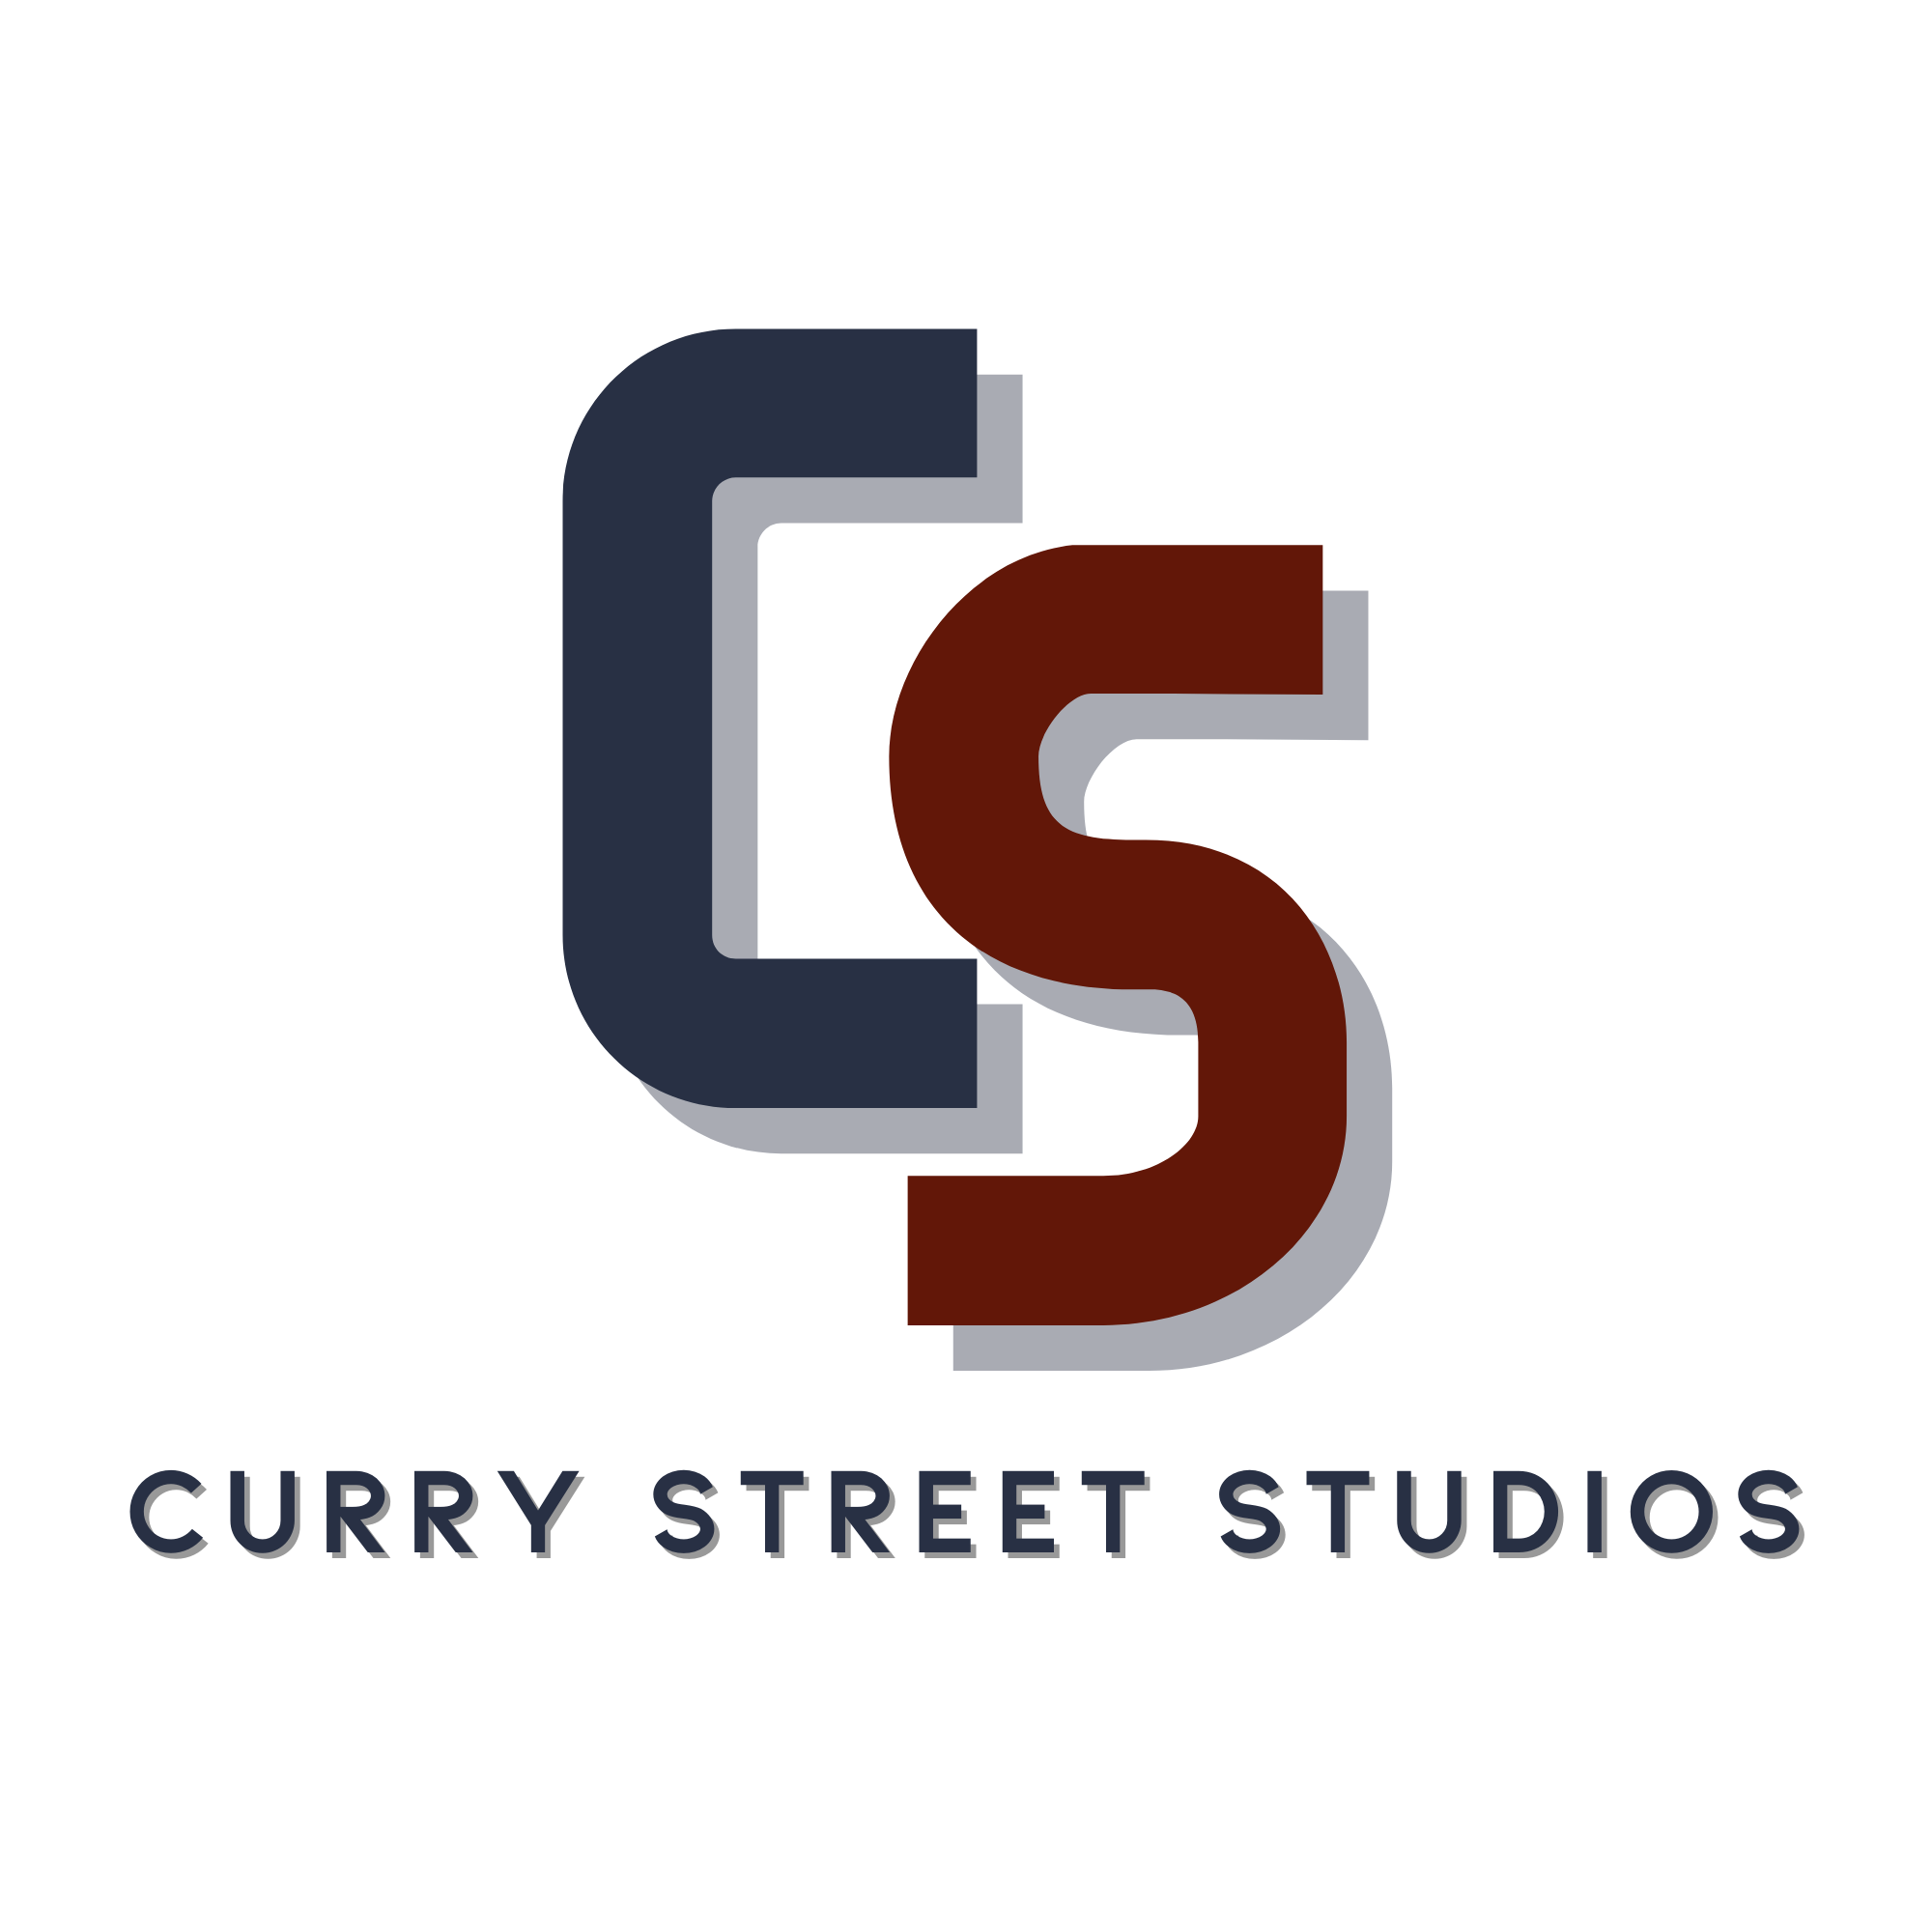 Curry Street Studios